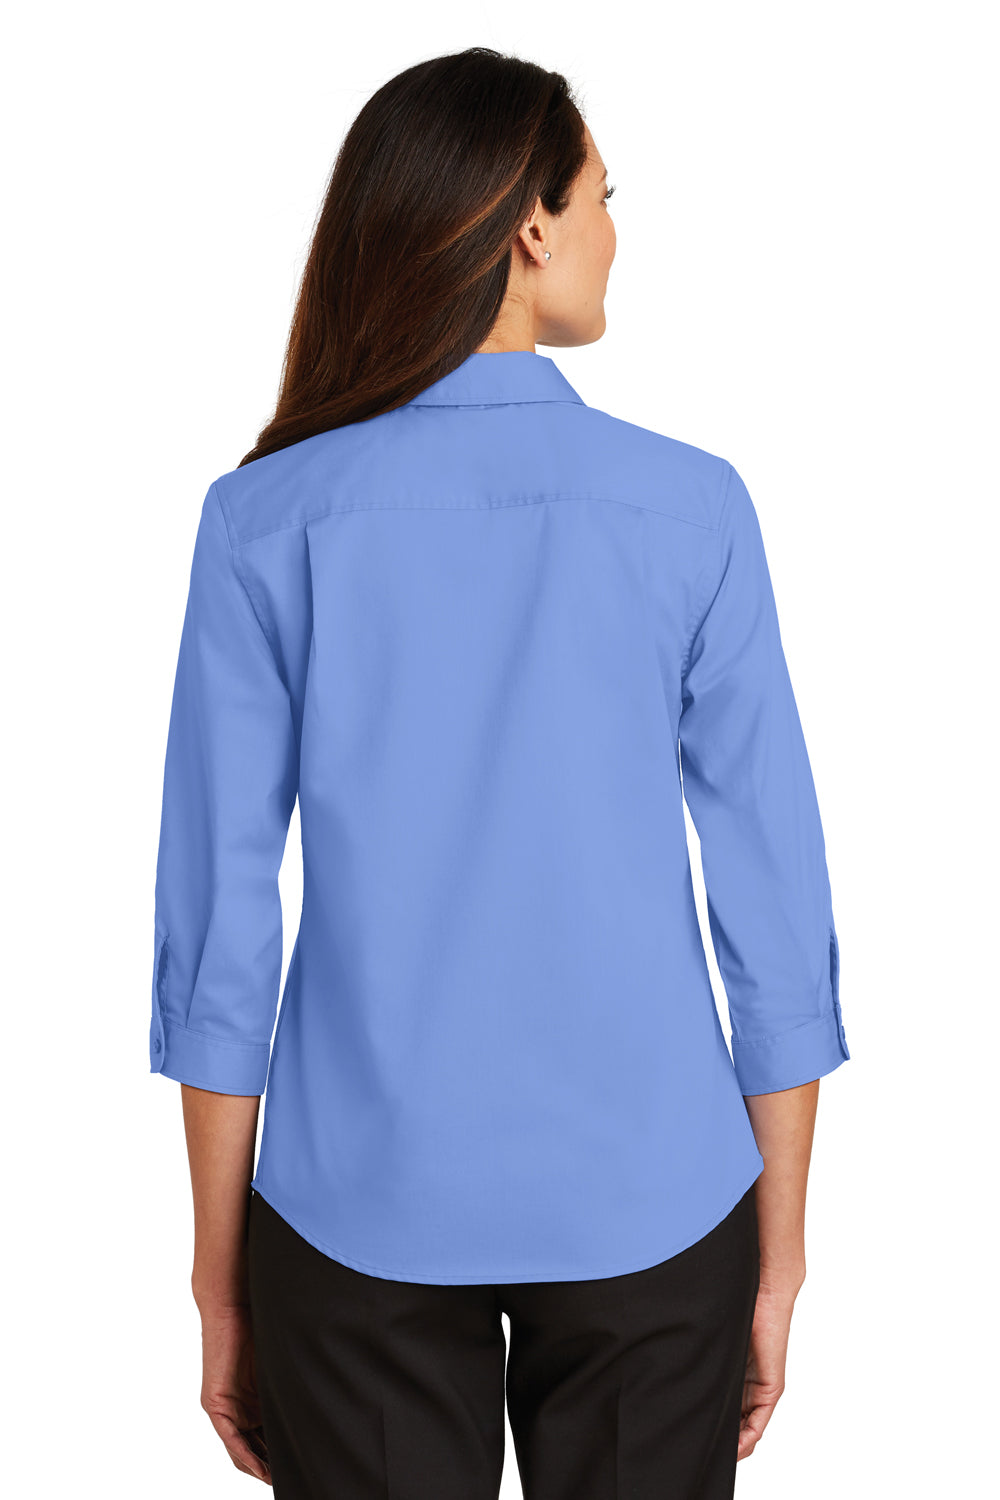 Port Authority L665 Womens SuperPro Wrinkle Resistant 3/4 Sleeve Button Down Shirt Ultramarine Blue Back